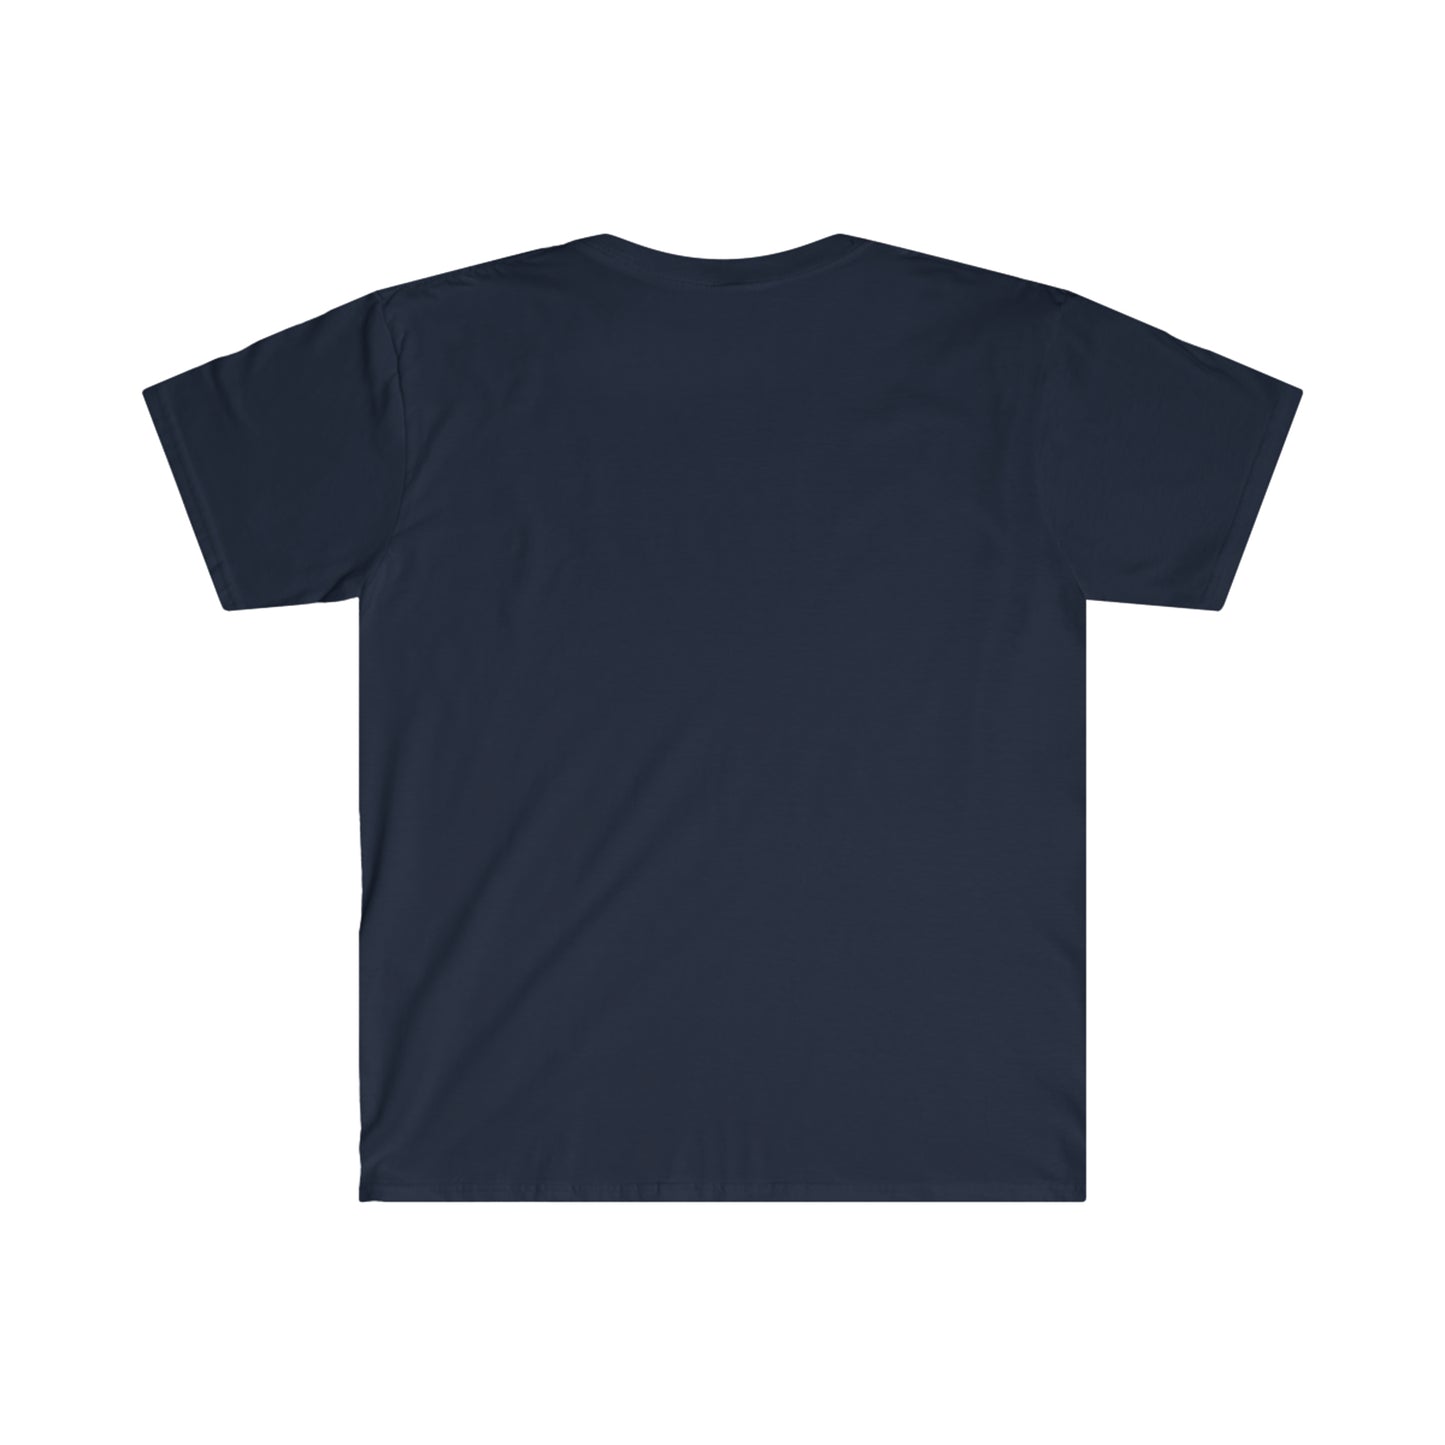 Kapuskasing - Men's Softstyle T-Shirt